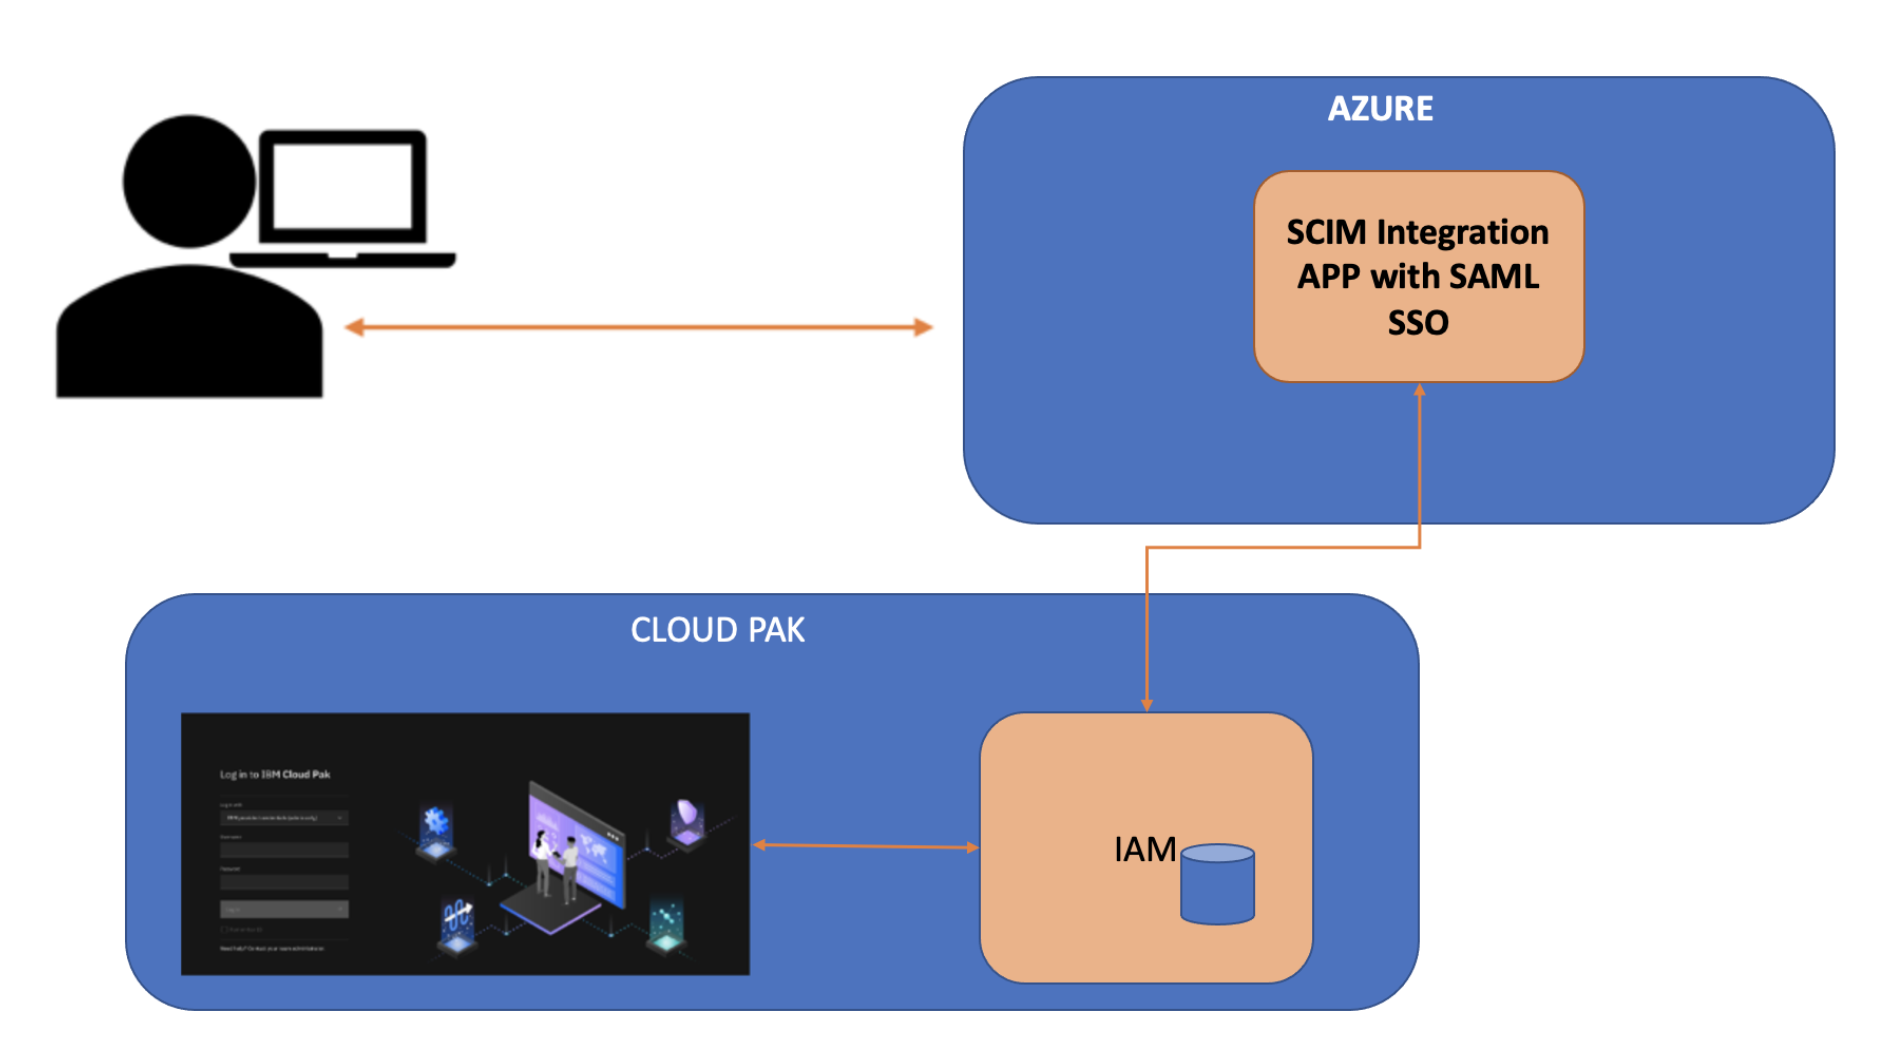 The image shows process diagram for azure SCIM integration